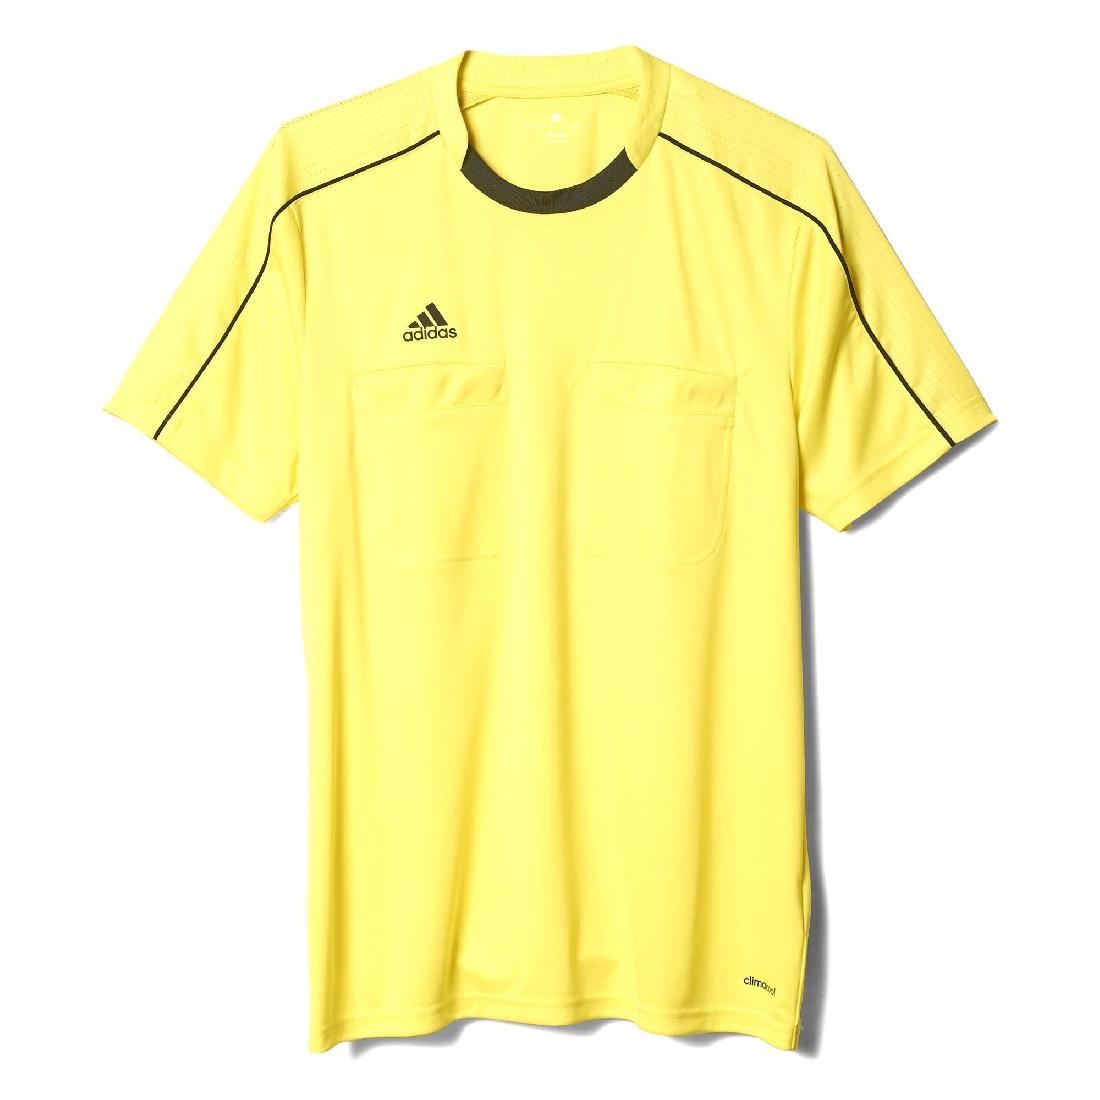    Adidas Referee16 SR    